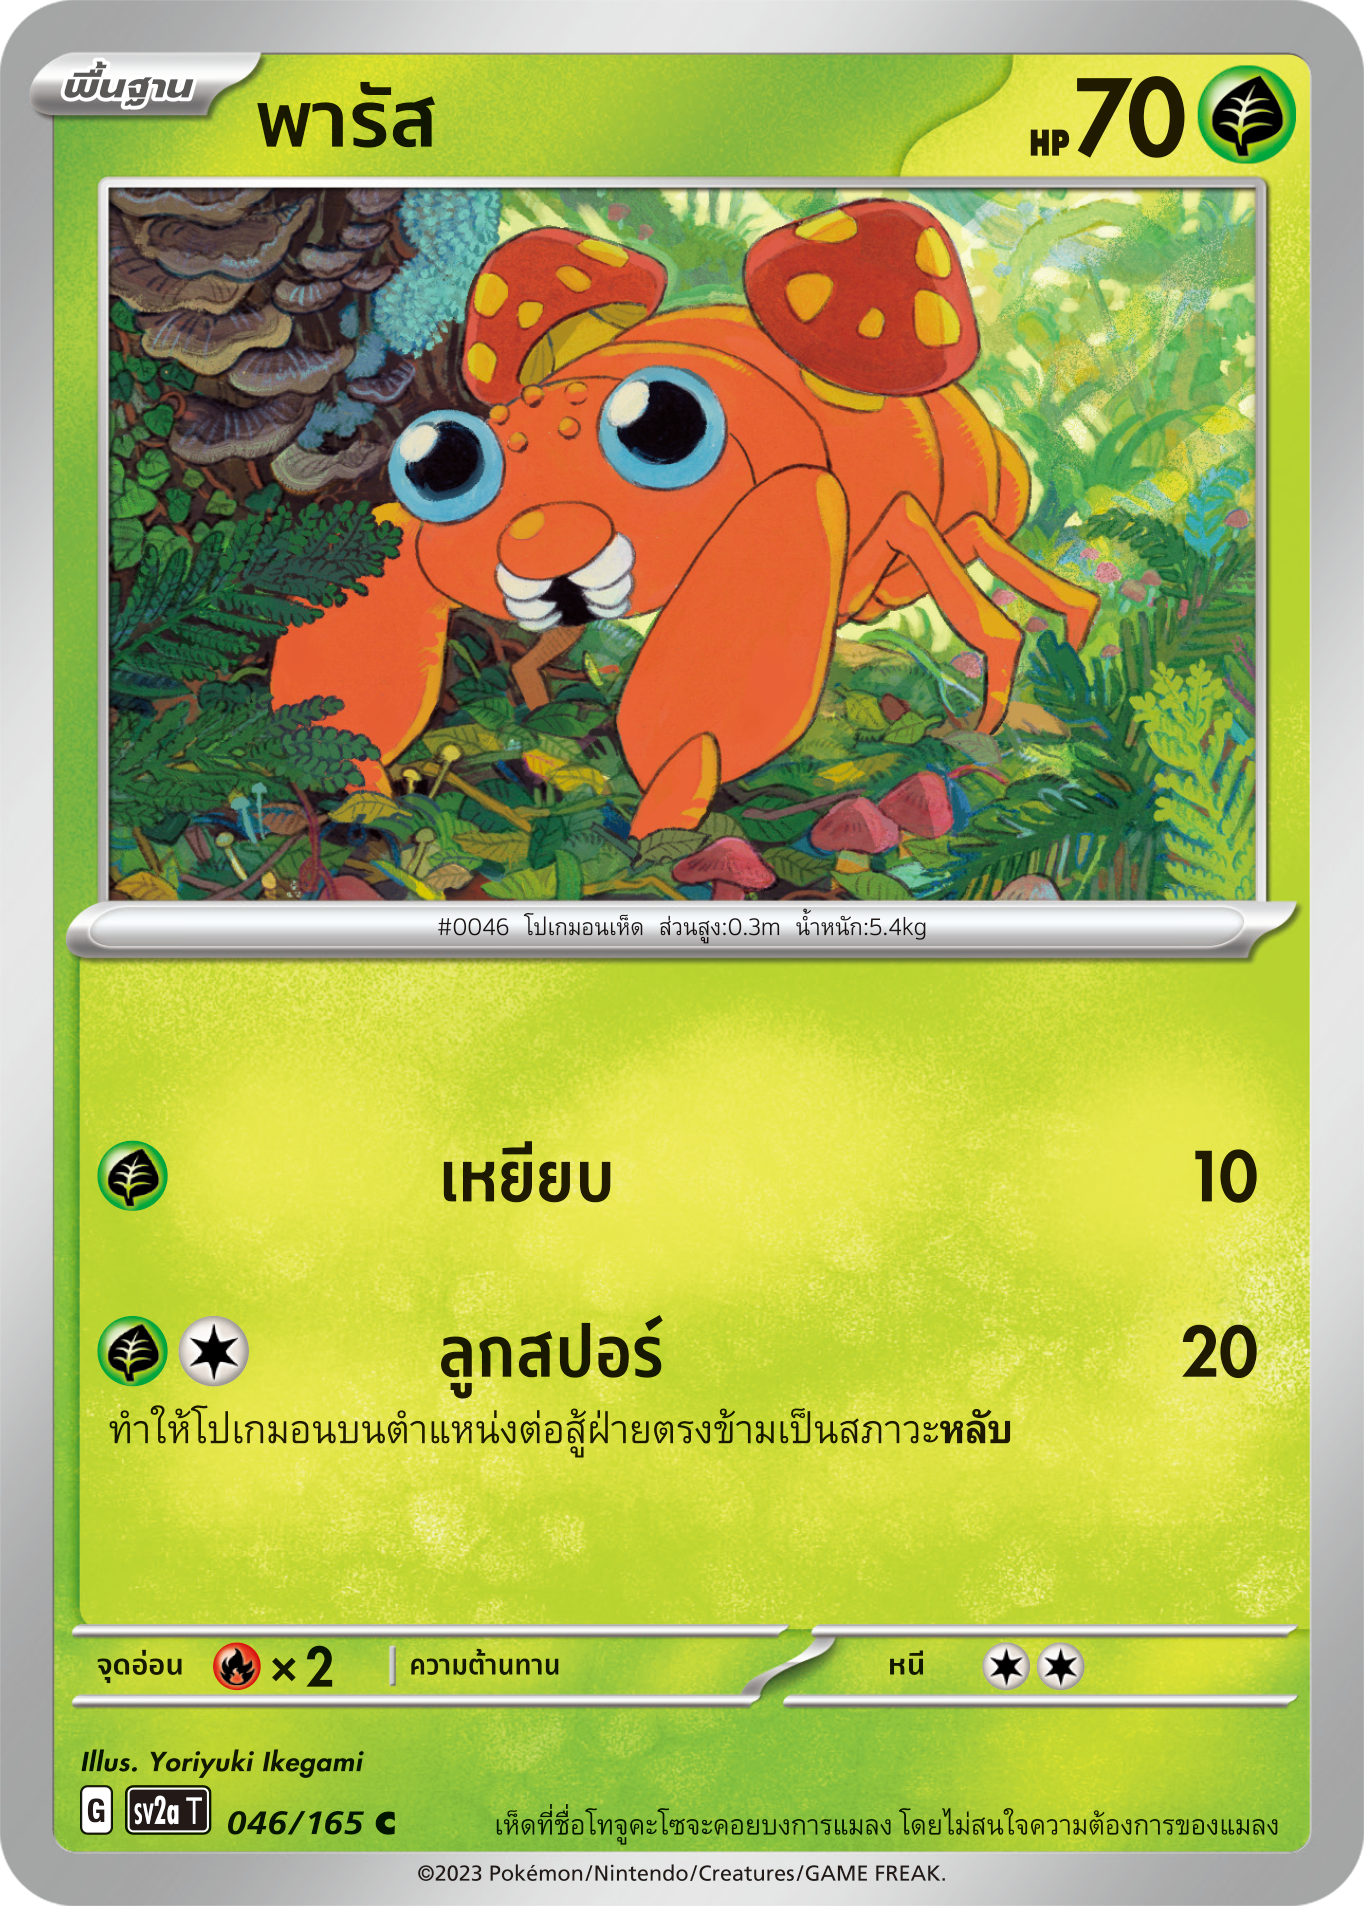 OFFICIAL THAI POKEMON Scarlett & Violet 151 BUNDLE 2 x 10 cards